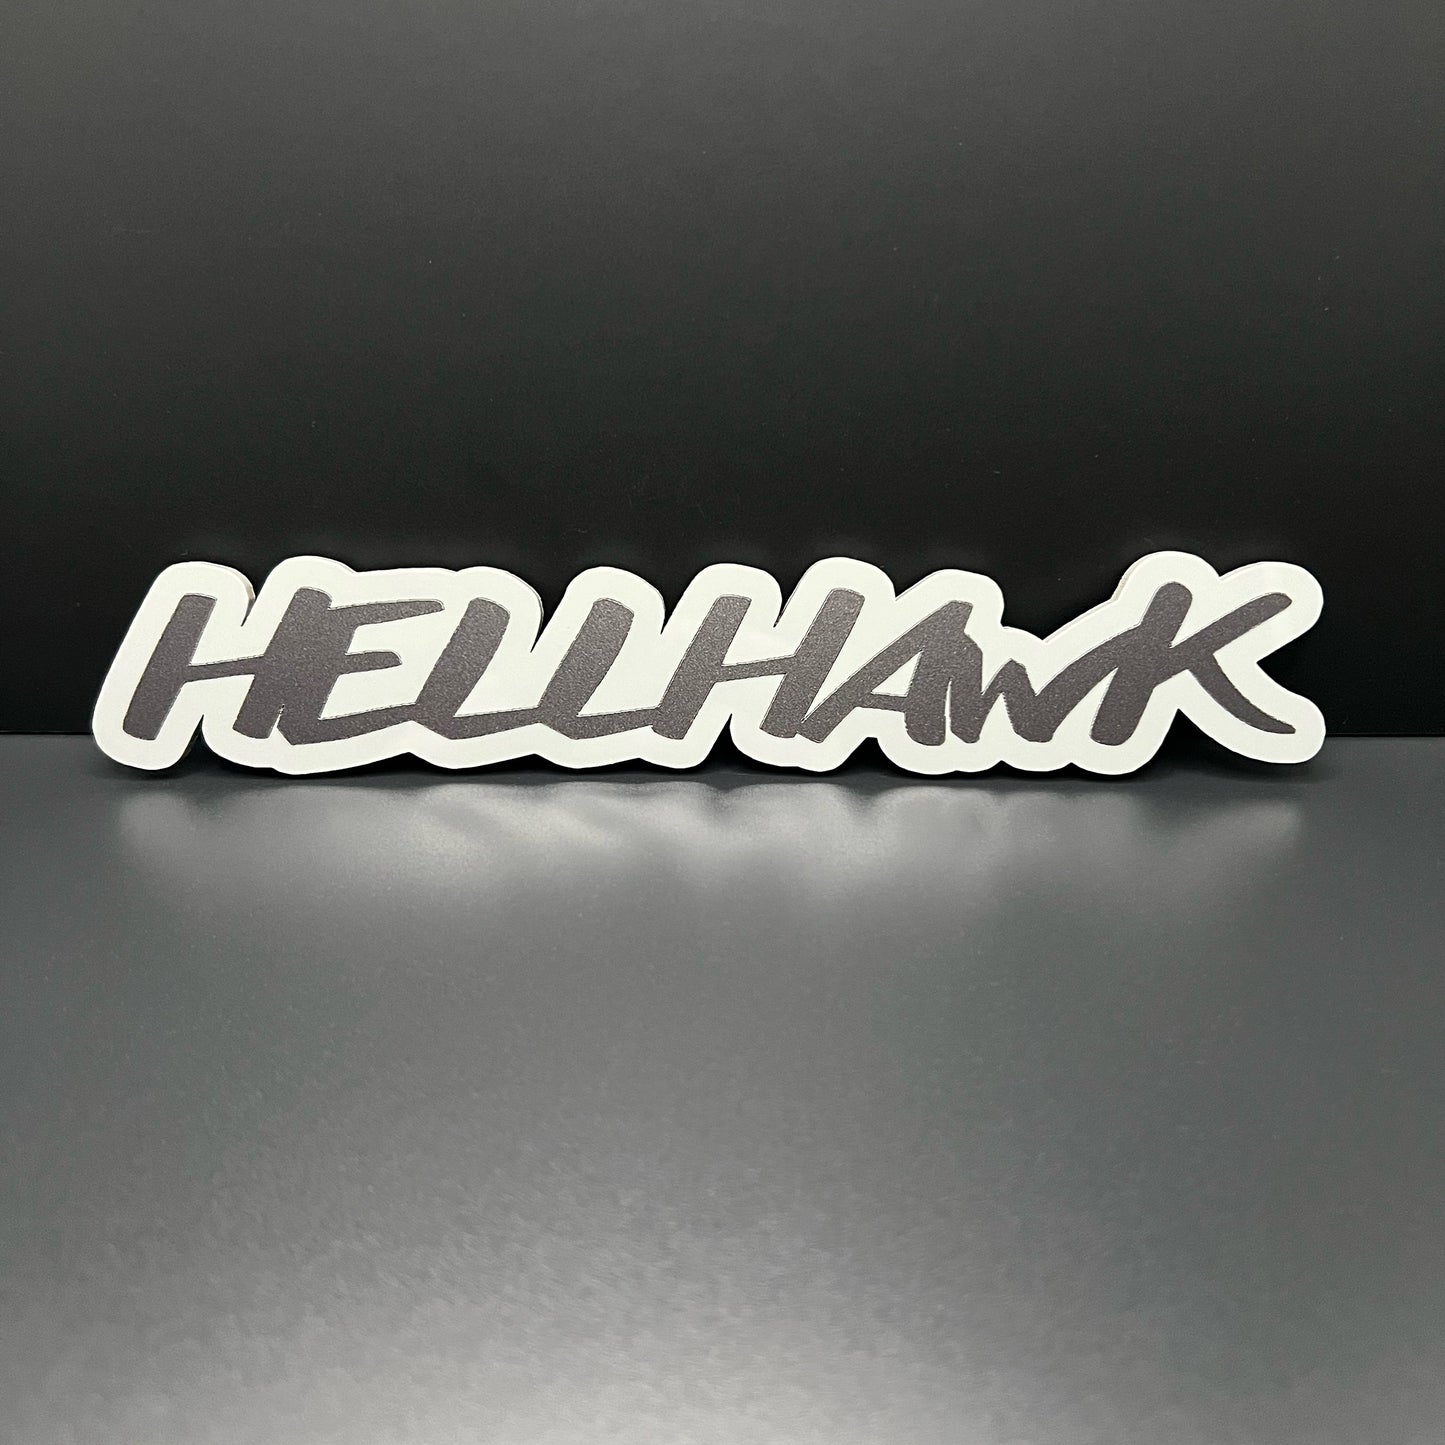 One HELLHAWK Emblem fits WK2 Jeep Trackhawk Grand Cherokee Liftgate or Door